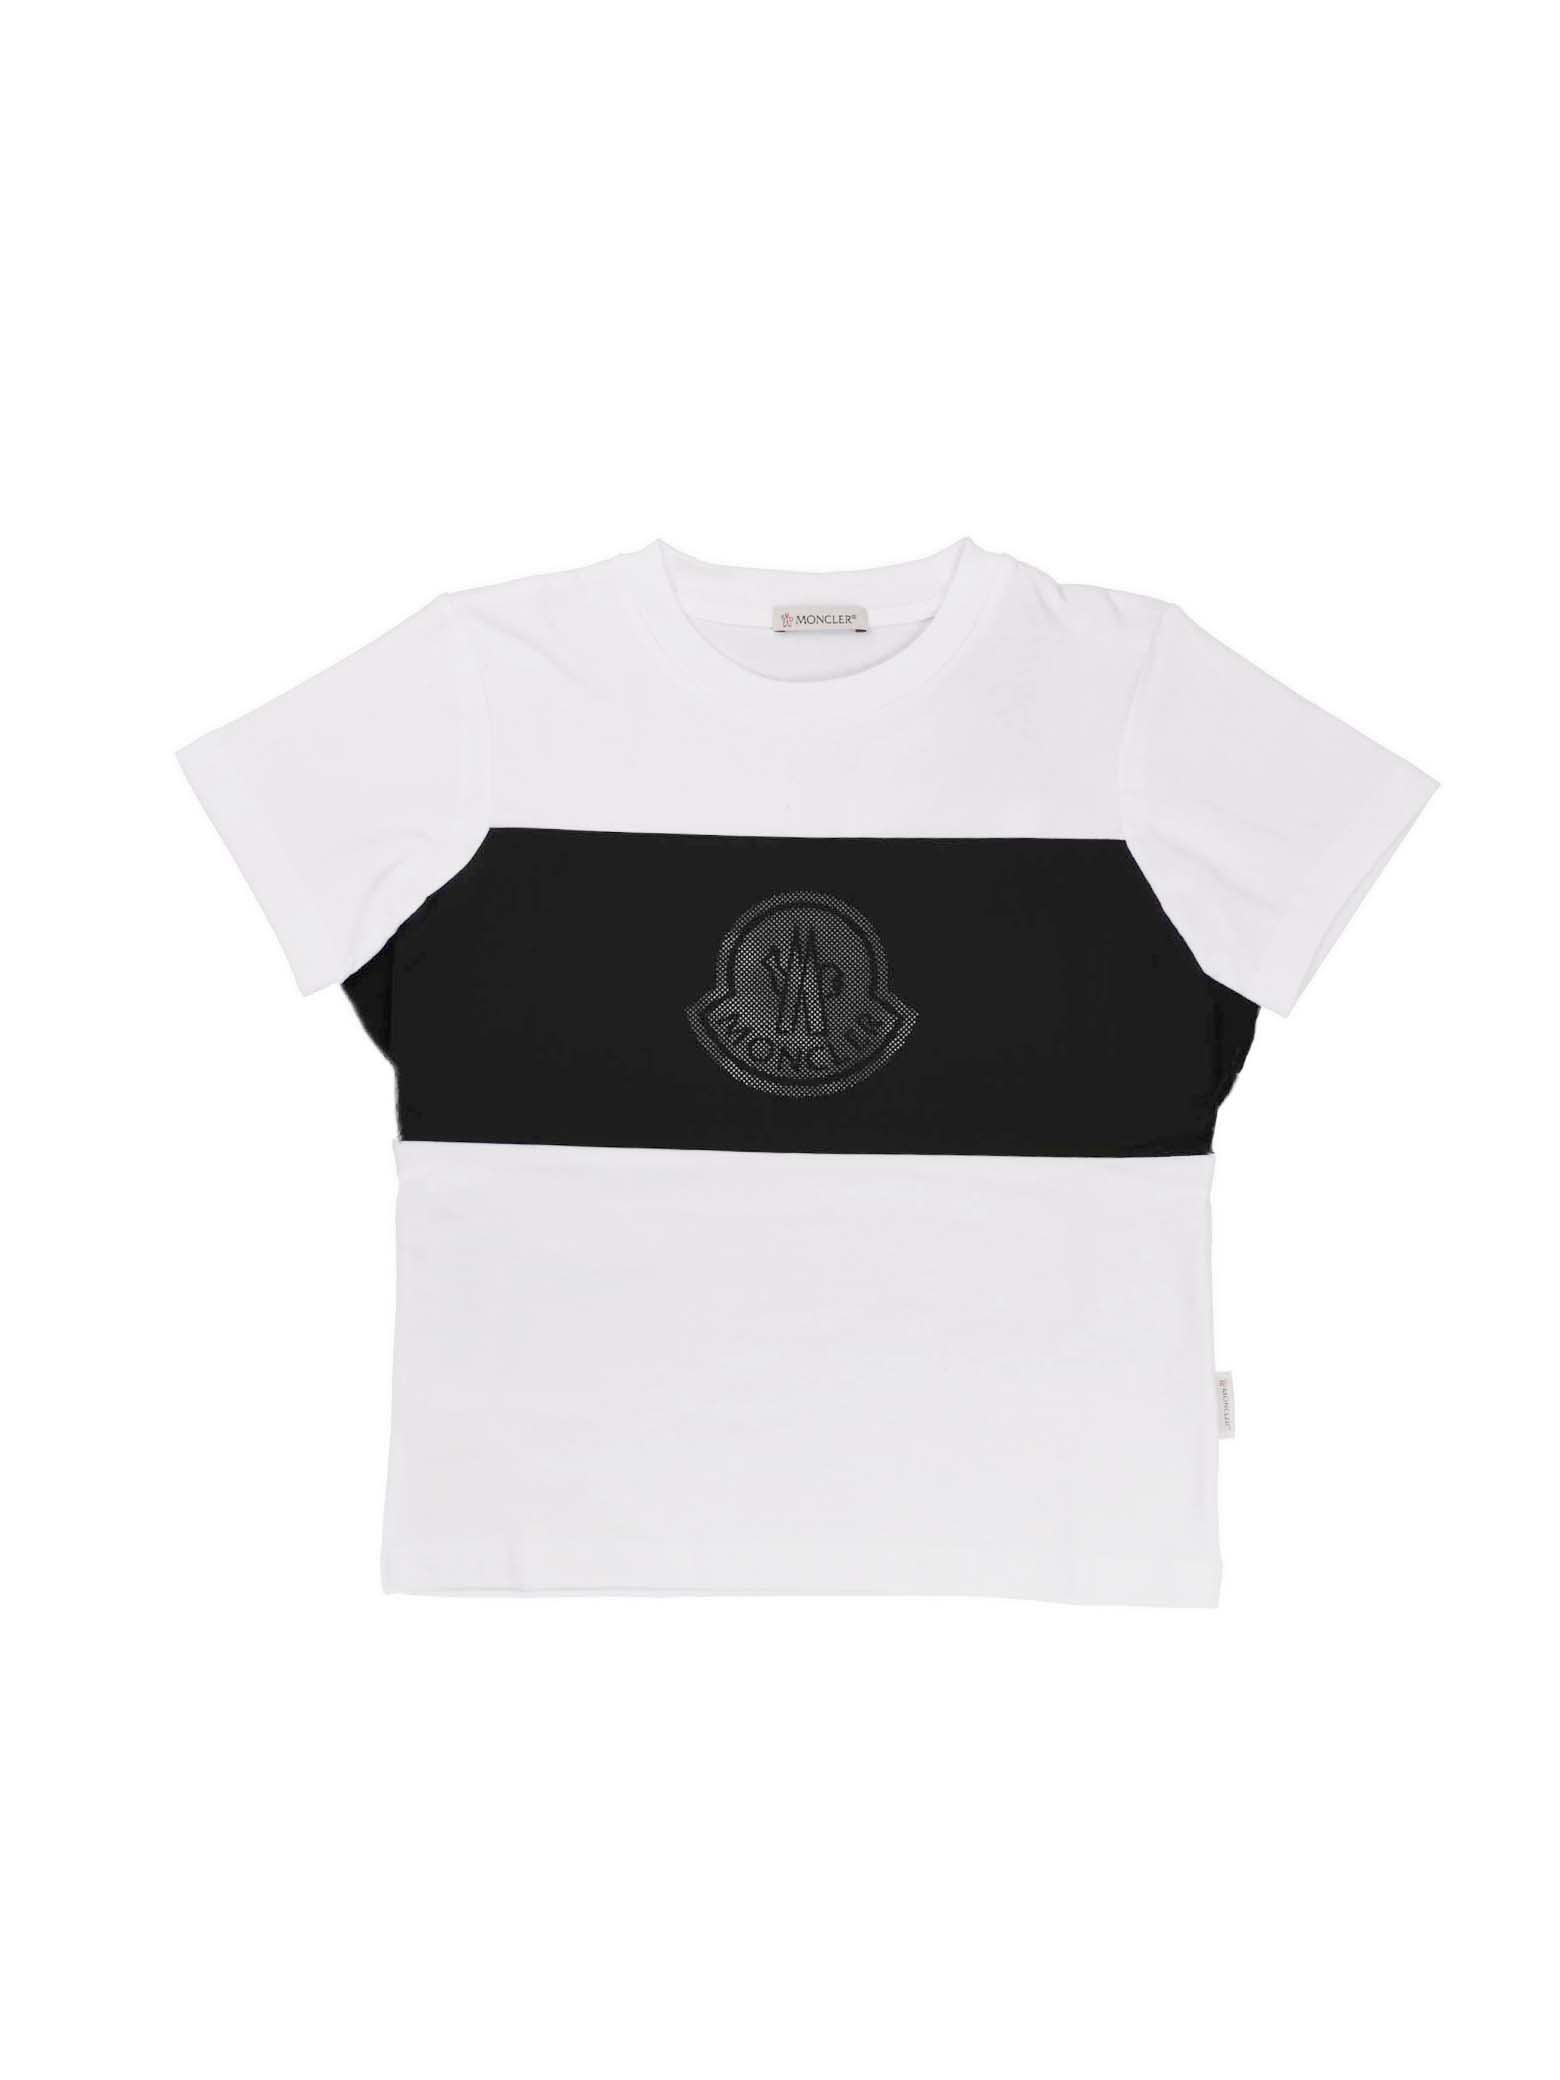 Moncler Black And White Short Sleeve T Shirt